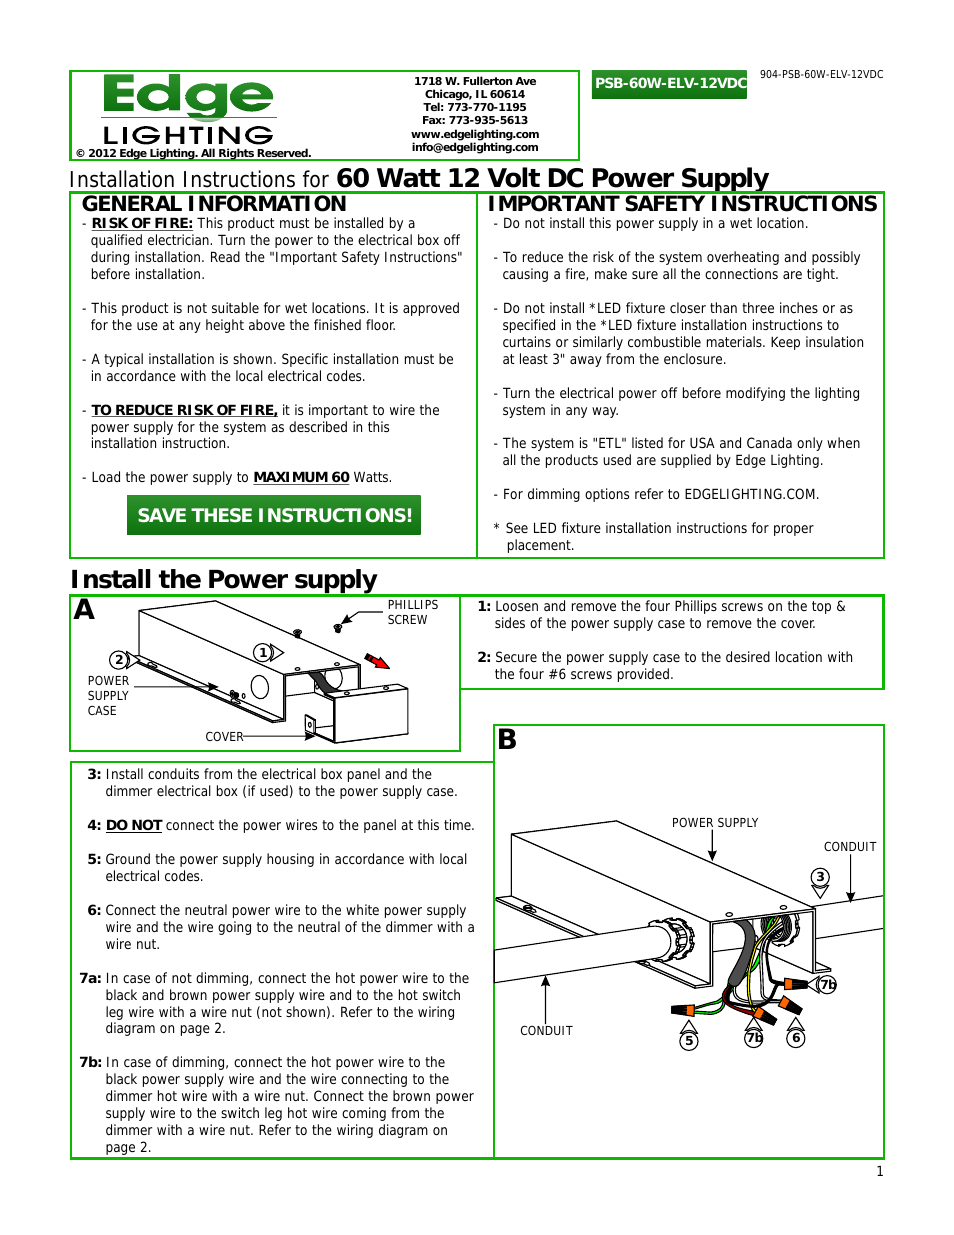 PSB-60W-ELV-12VDC, 60 Watt 12 Volt DC Power Supply